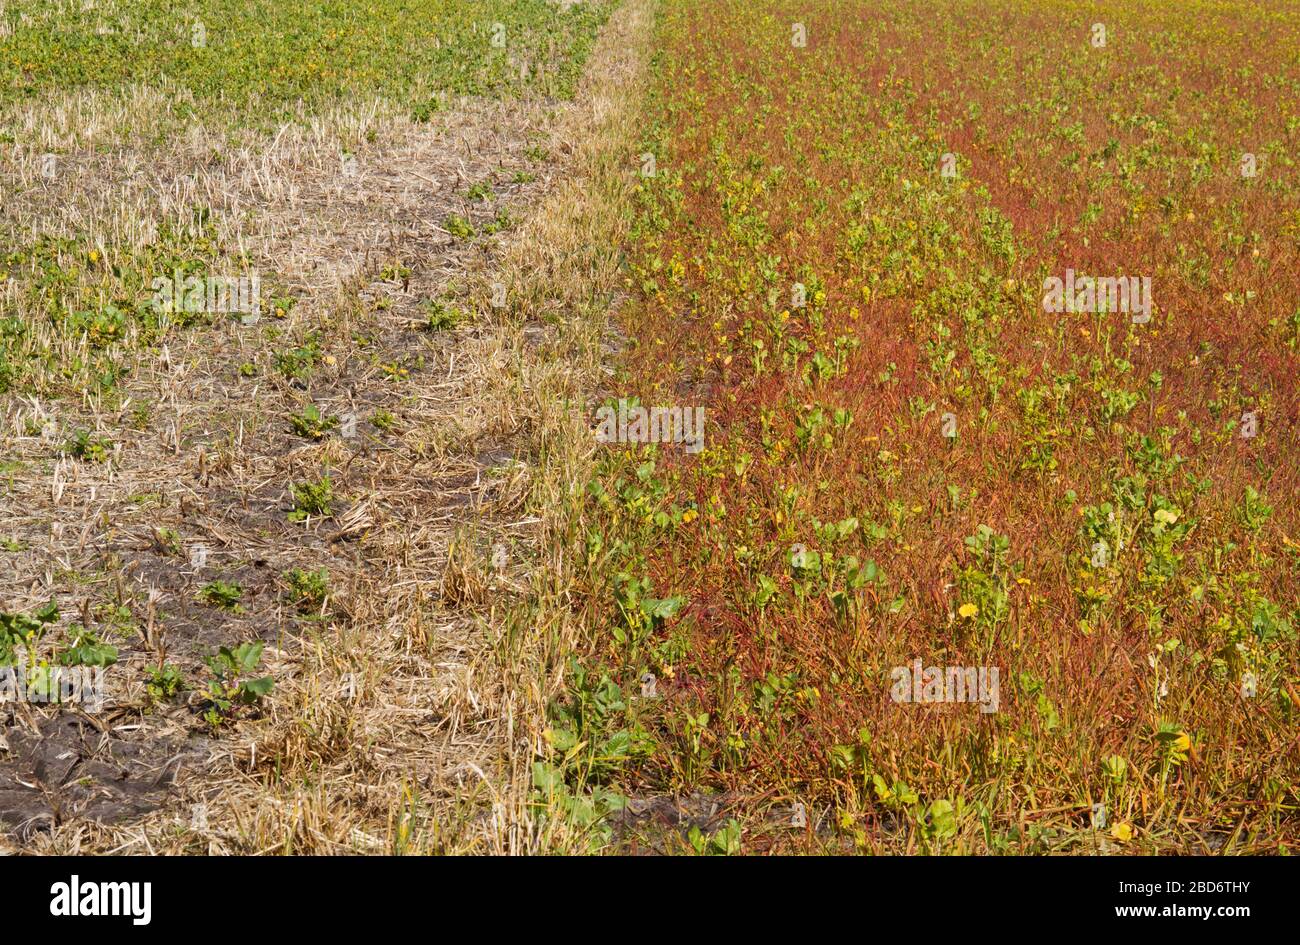 Effect of glyphosate herbicide sprayed on weeds Stock Photo